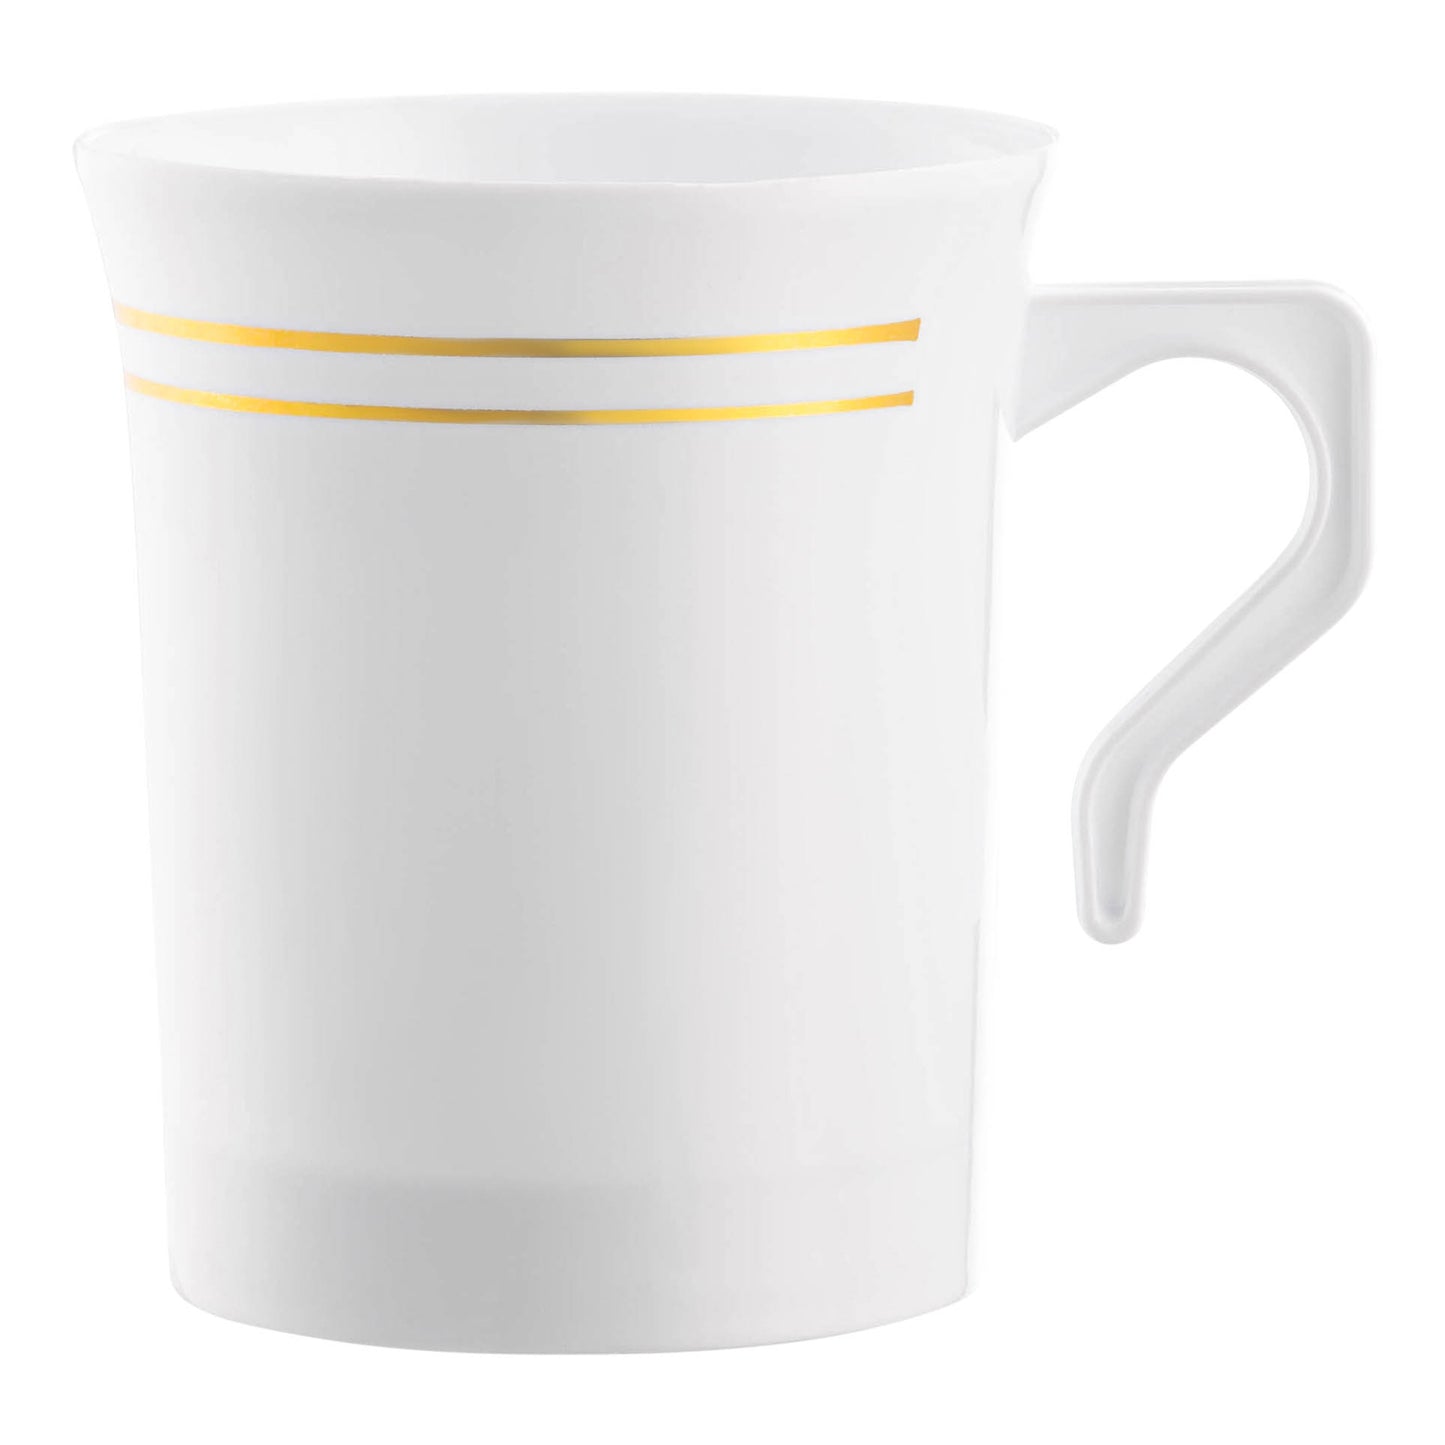 8 oz. White with Gold Edge Rim Round Disposable Plastic Coffee Mugs